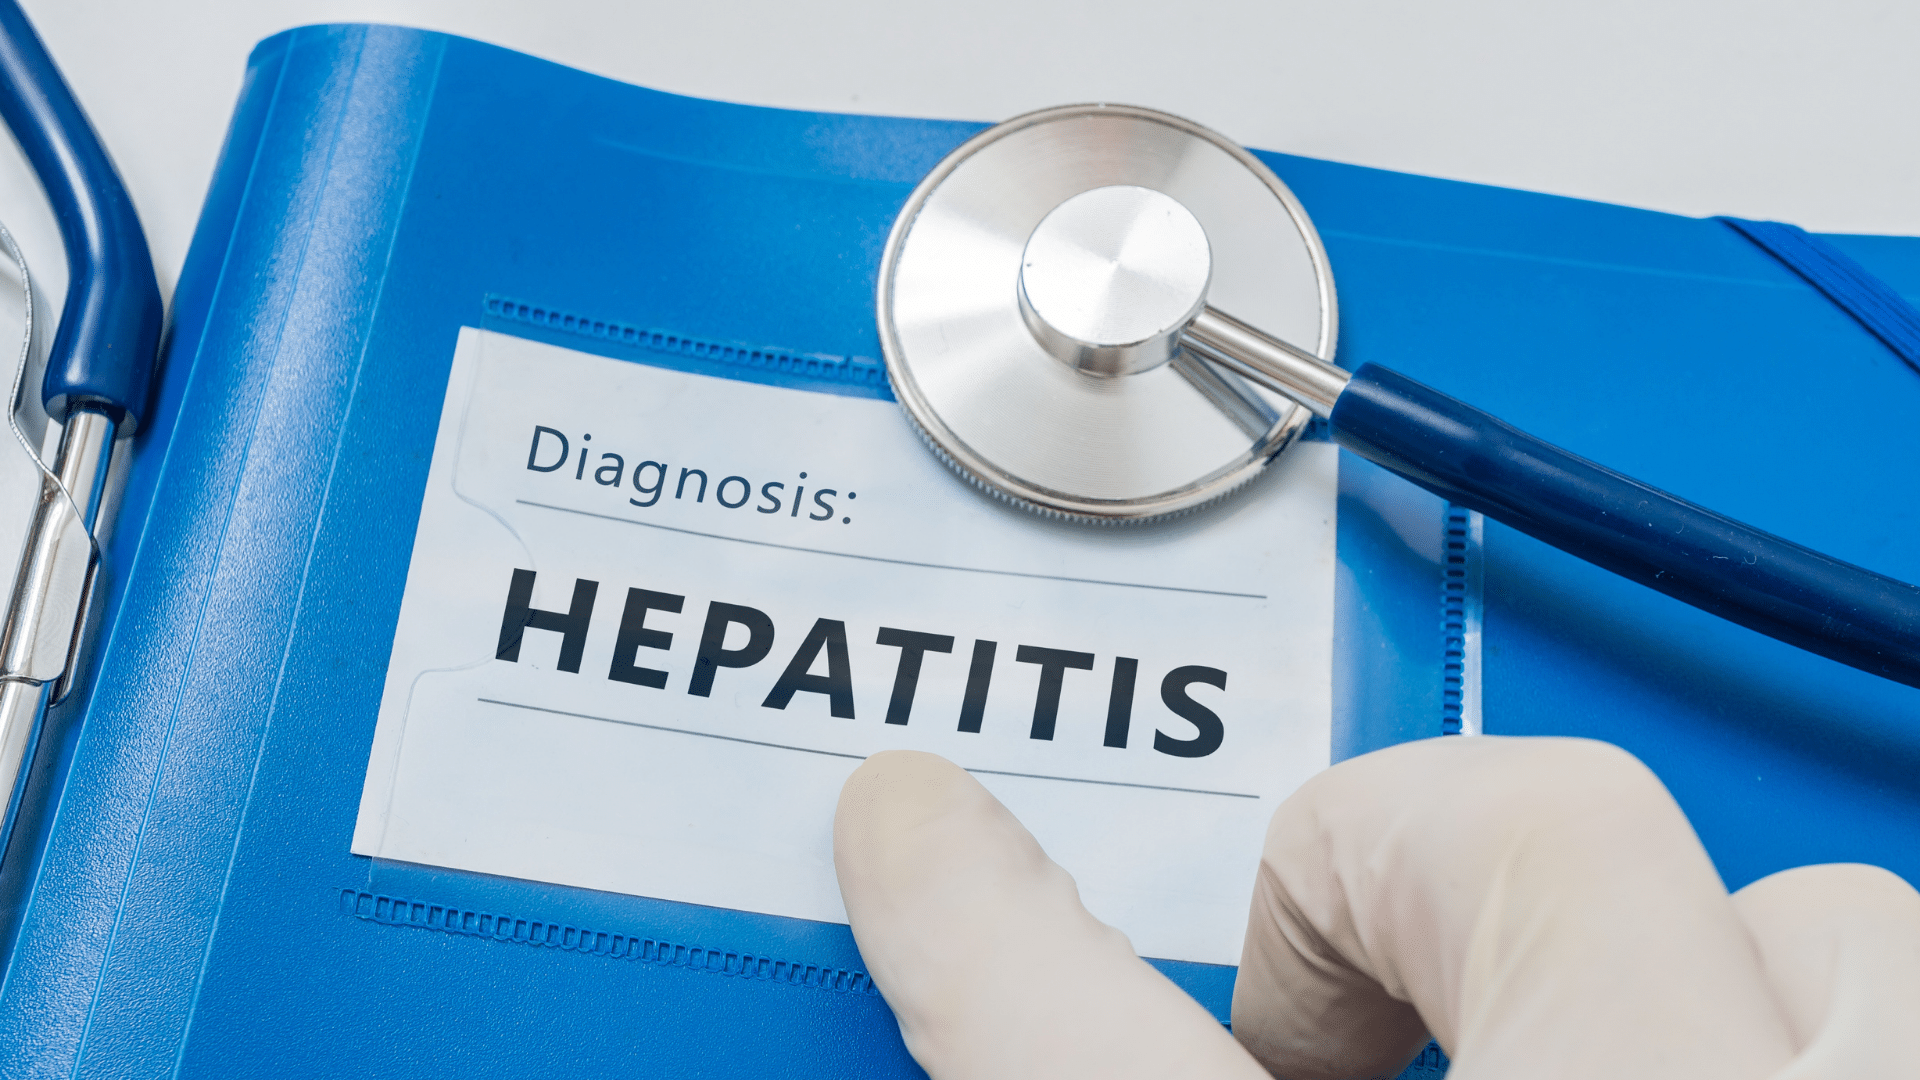 Hepatitis Services